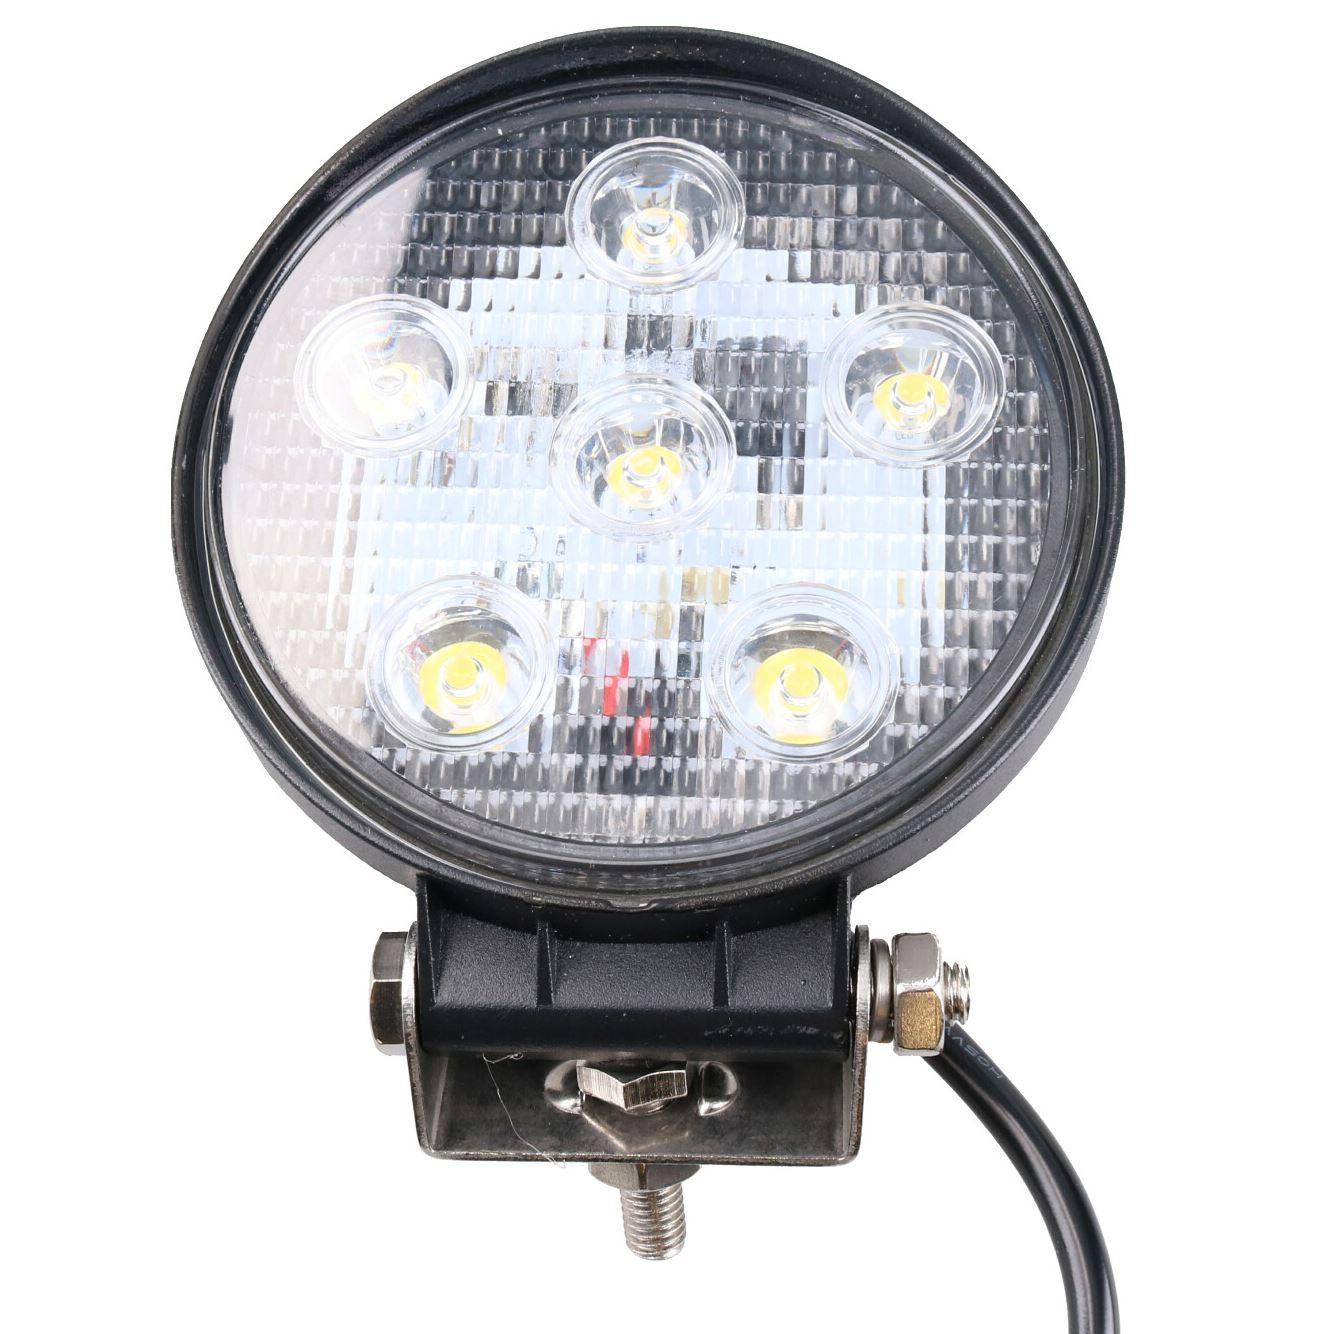 Professional IP67 LED 15w Spot Light Lamp 12v 24v Van 1000lm 6500k Plant